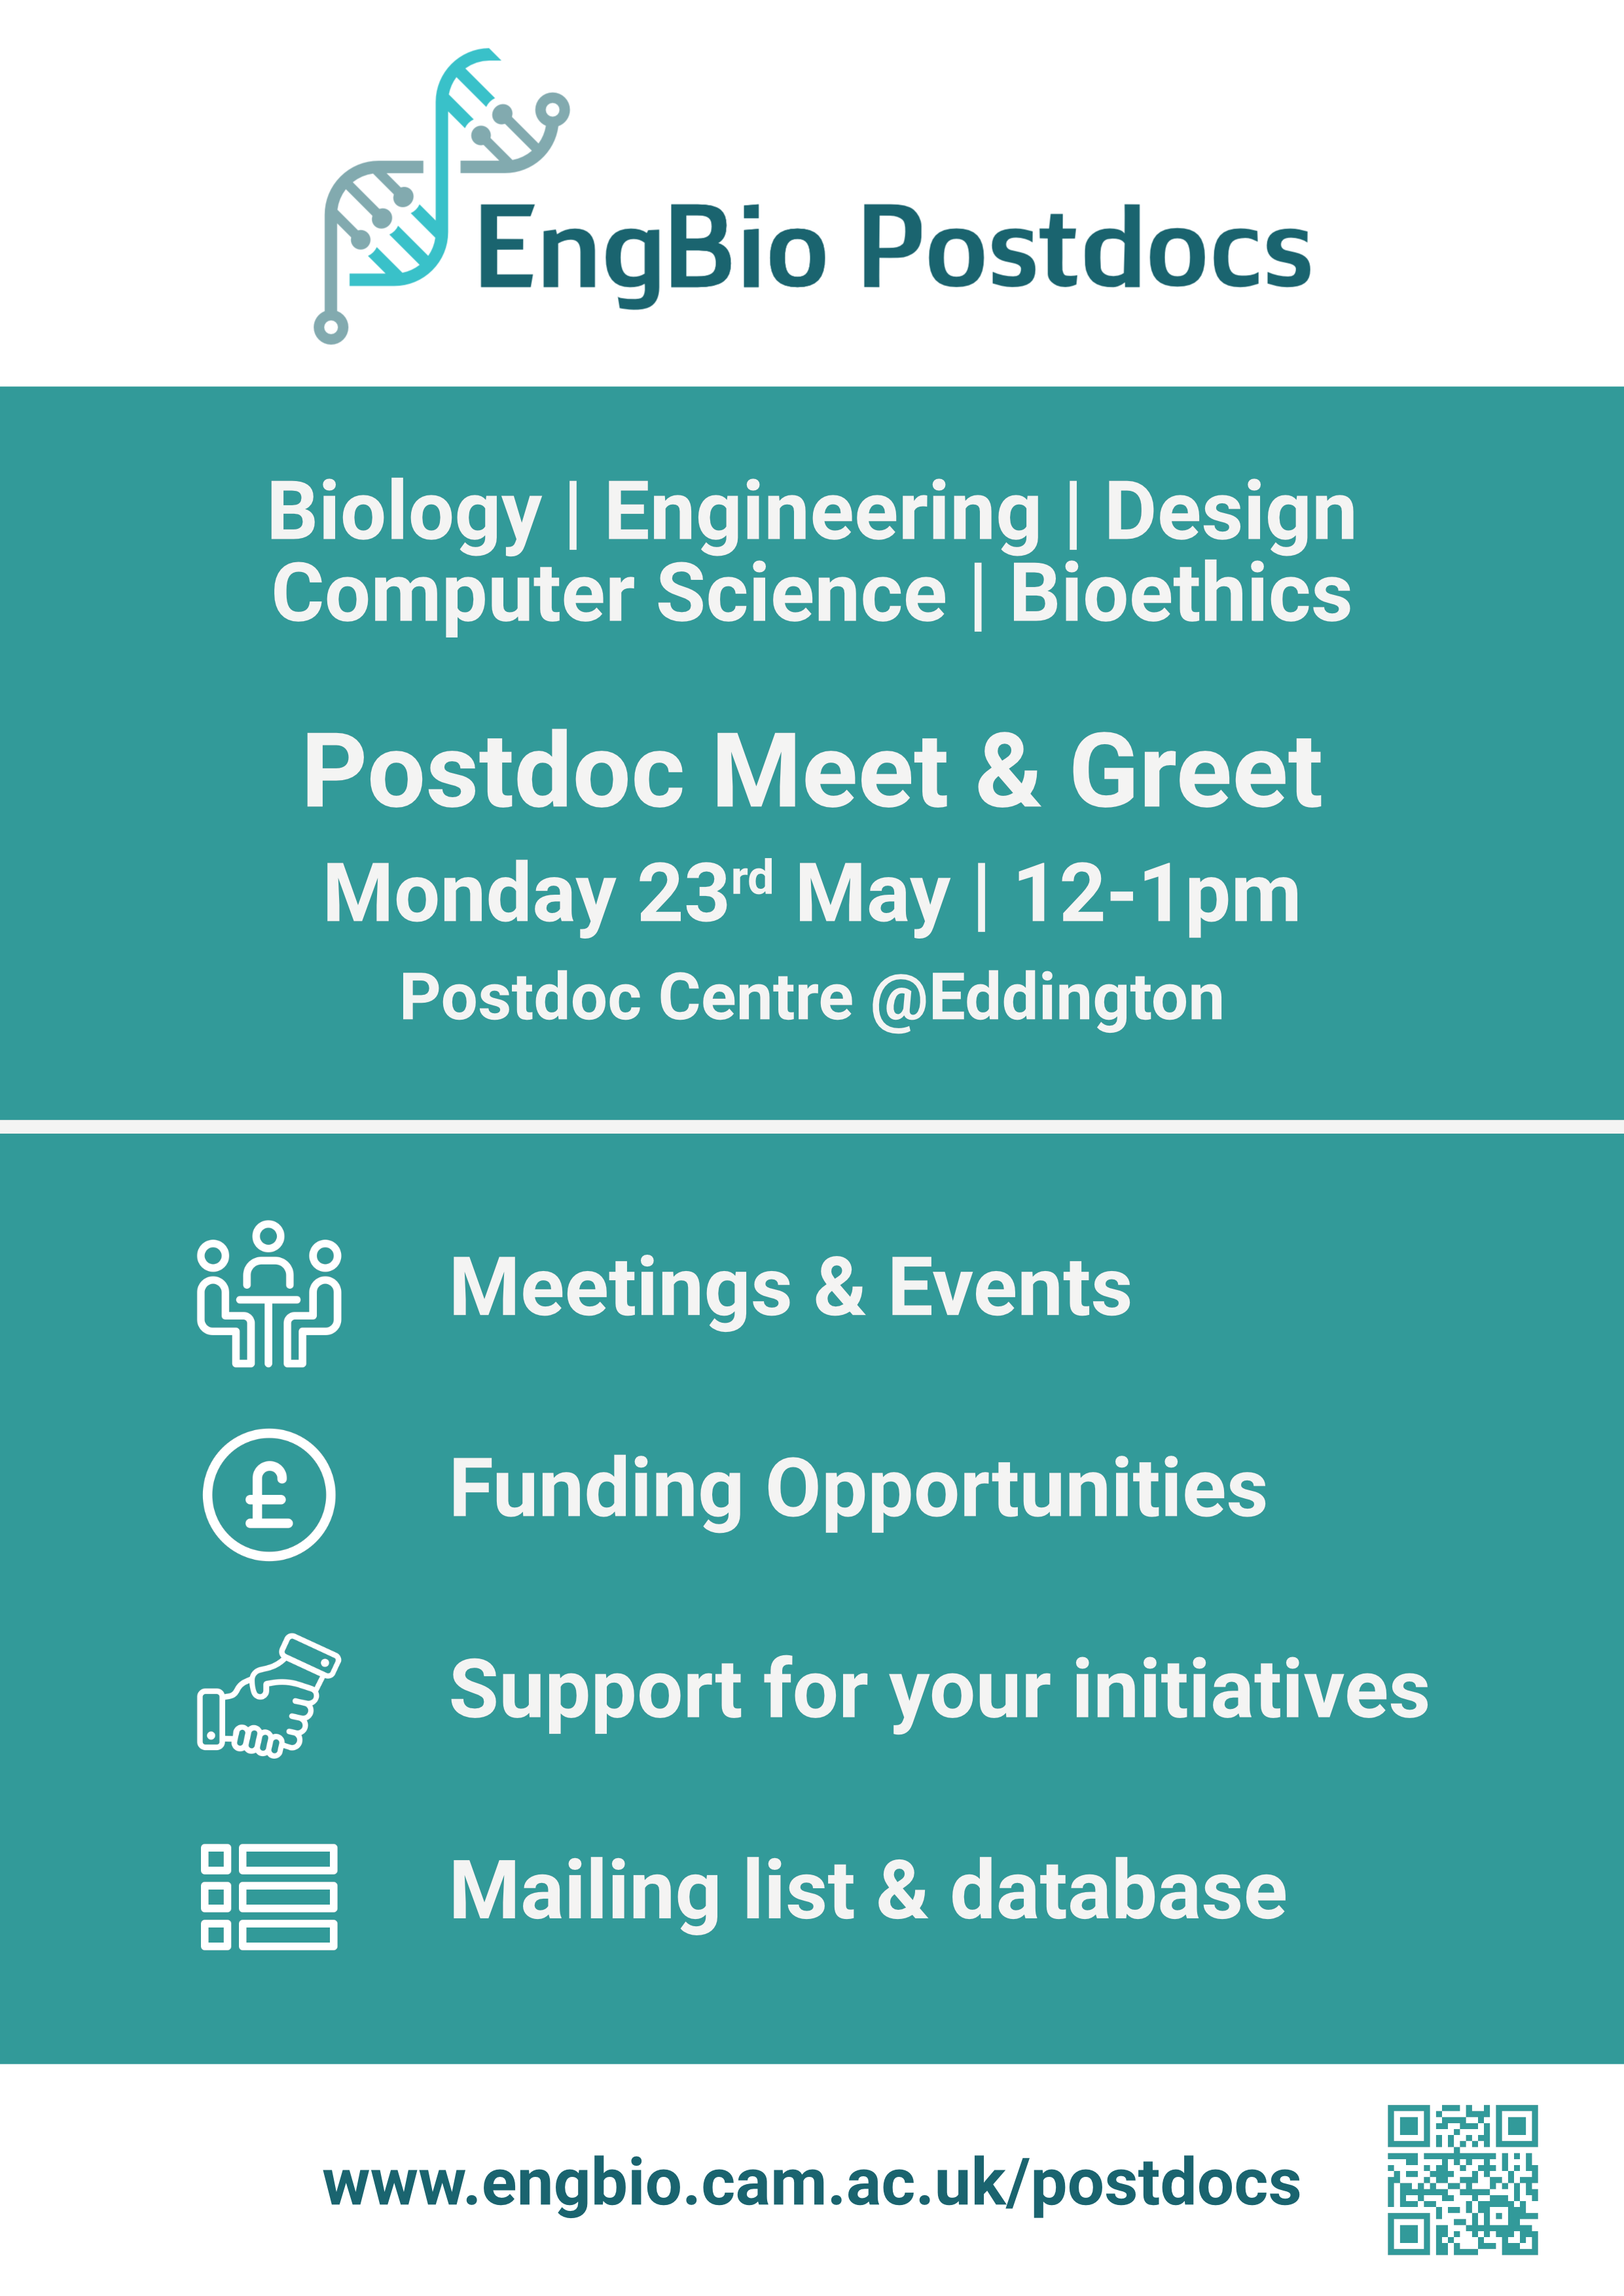 EngBio Postdocs Meet and Greet - Monday 23rd May - 12-1pm - Postdoc Centre @Eddington - Register Now